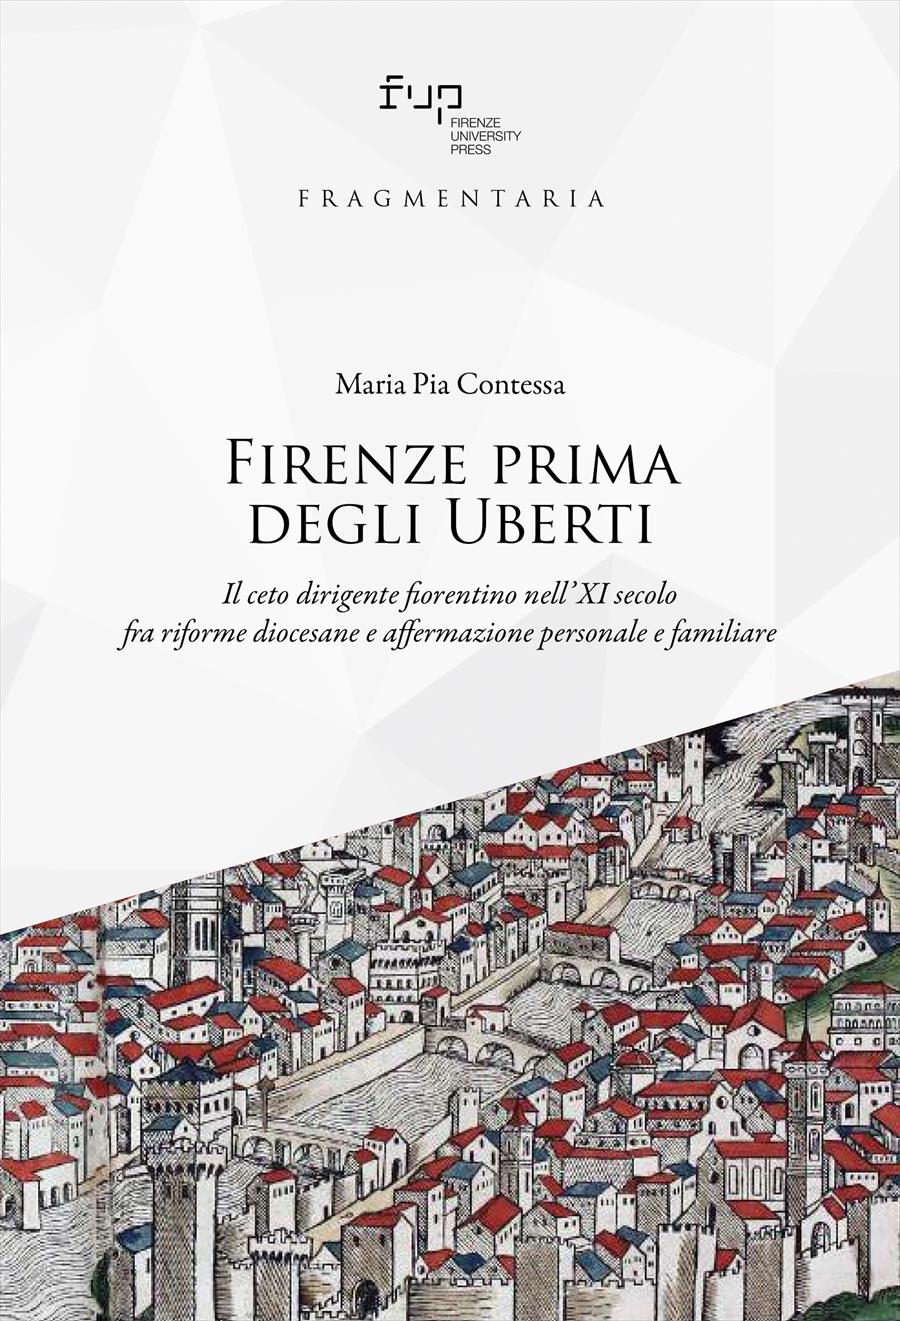 Referee List - Firenze University Press